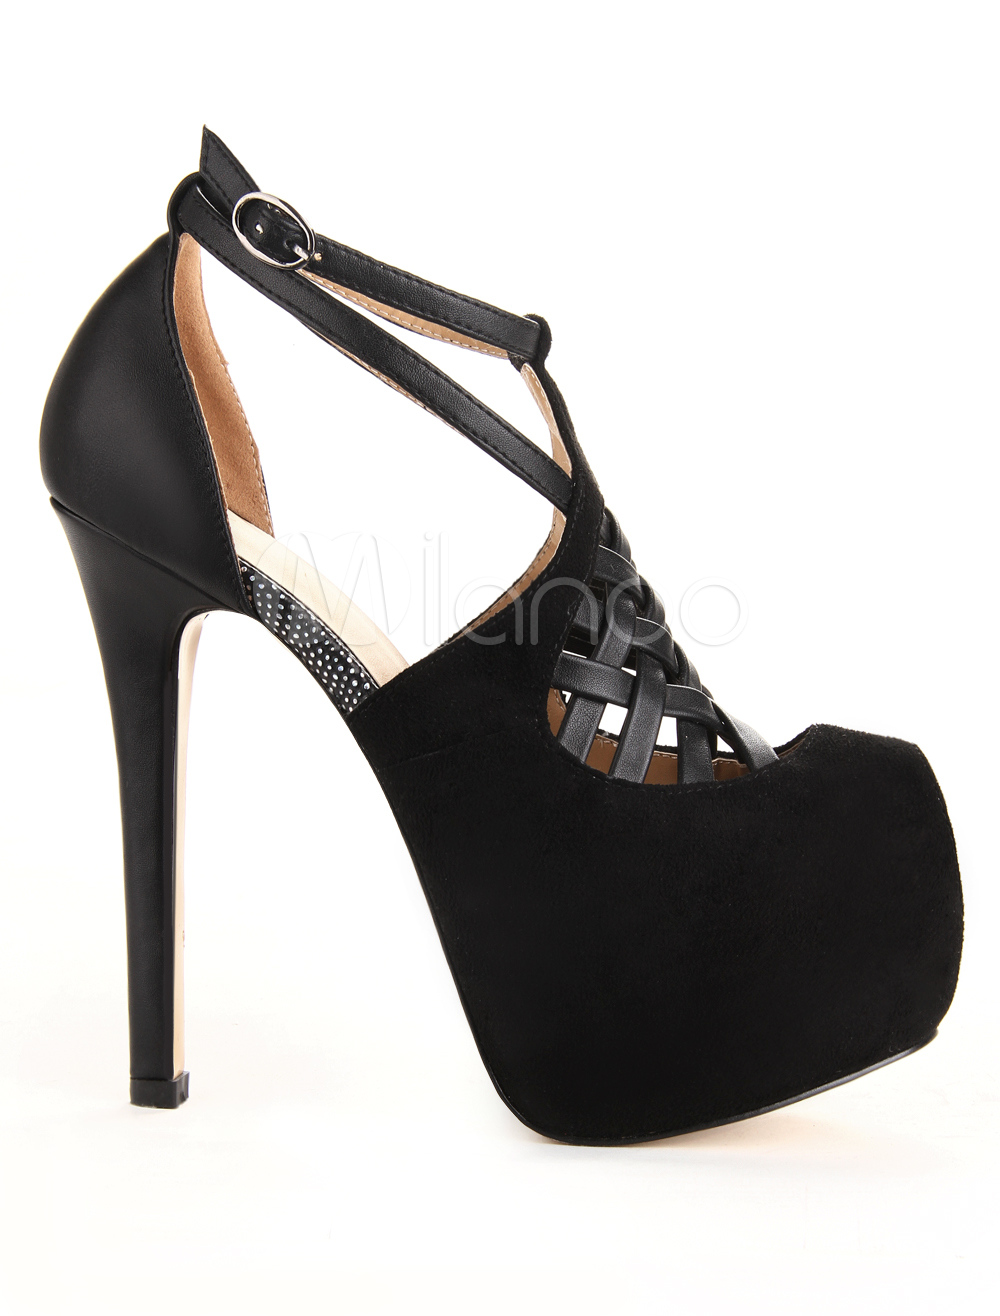 Black Peep Toe Stiletto Heel Suede High Heel - Milanoo.com